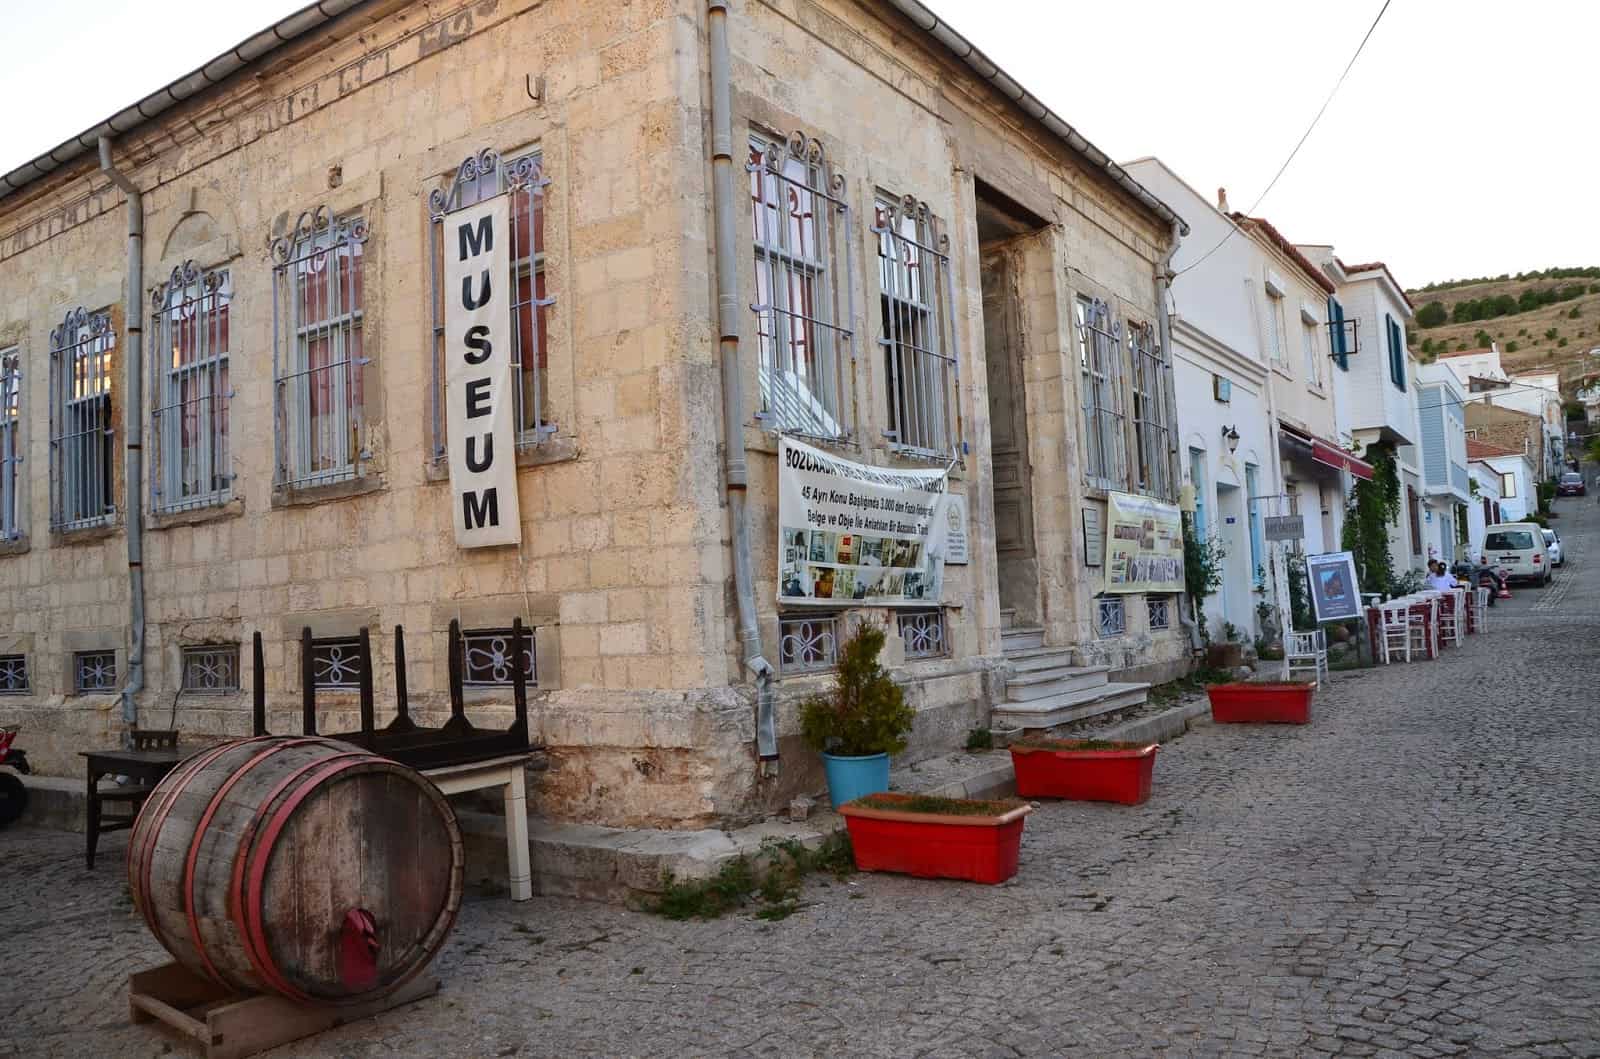 Bozcaada Museum in Bozcaada, Turkey